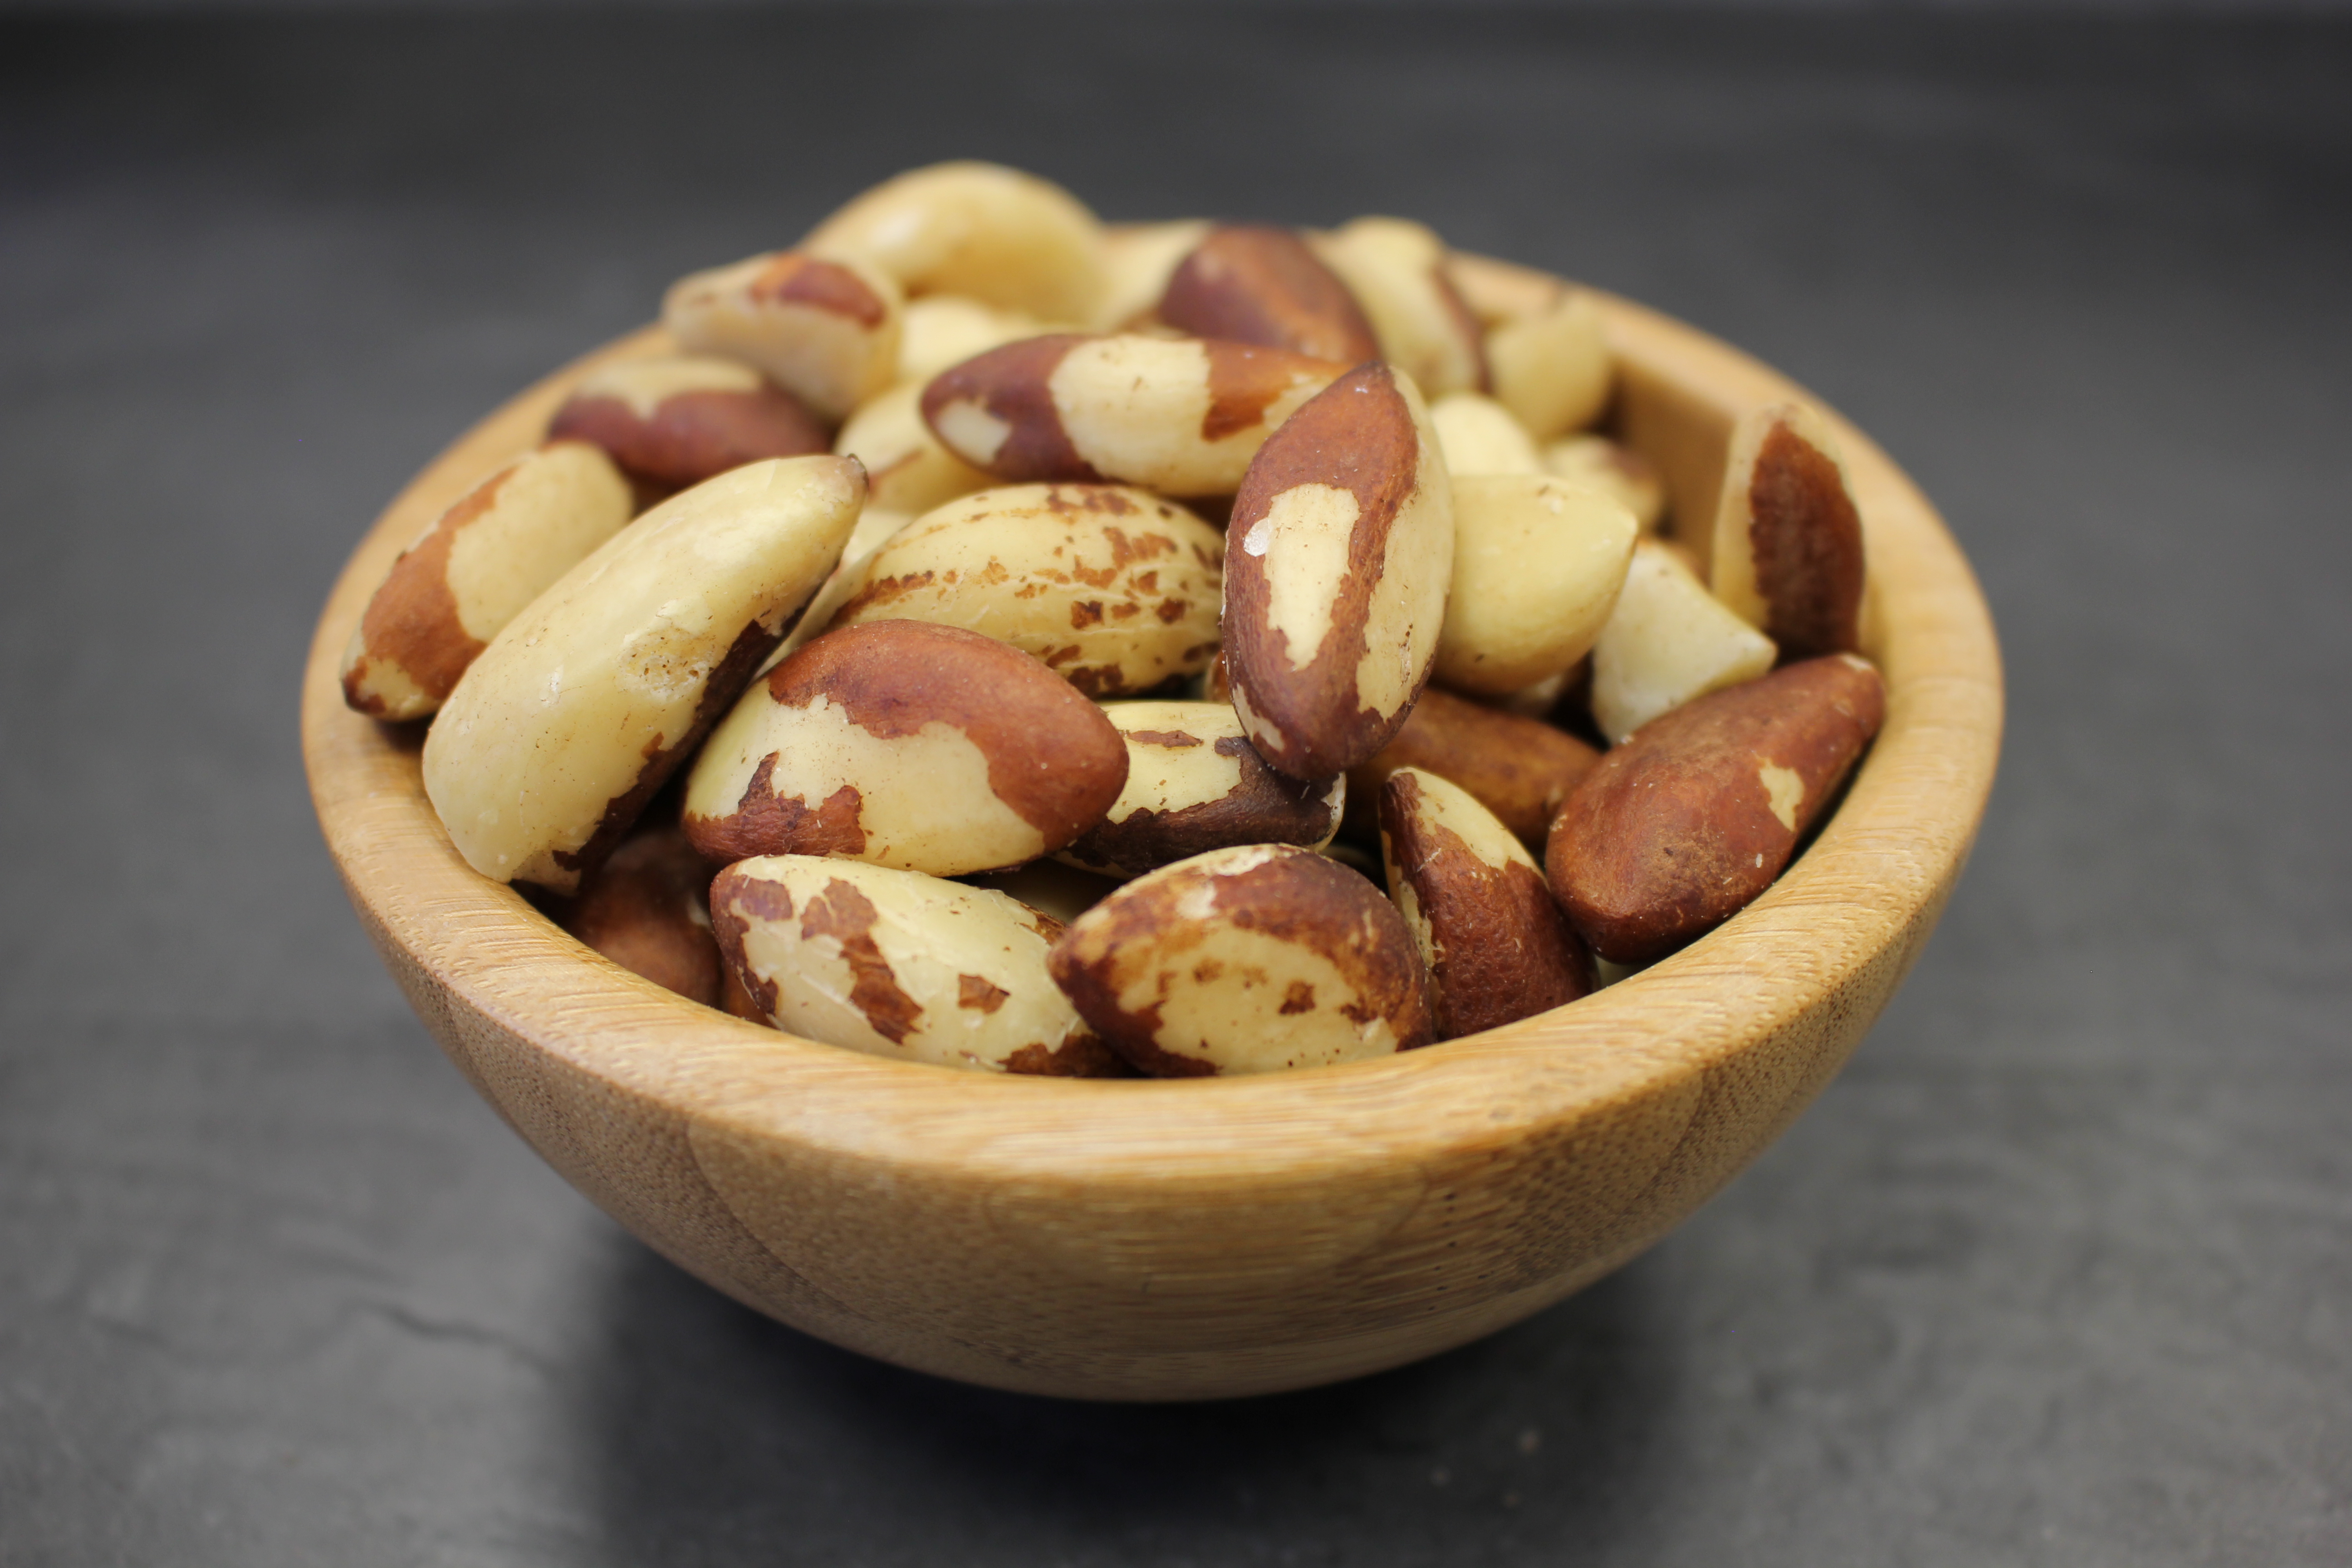 Nuts & kernels (Brazil Nut, Almond, Cashew, Macadamia, Pecan, Hazelnut and more)